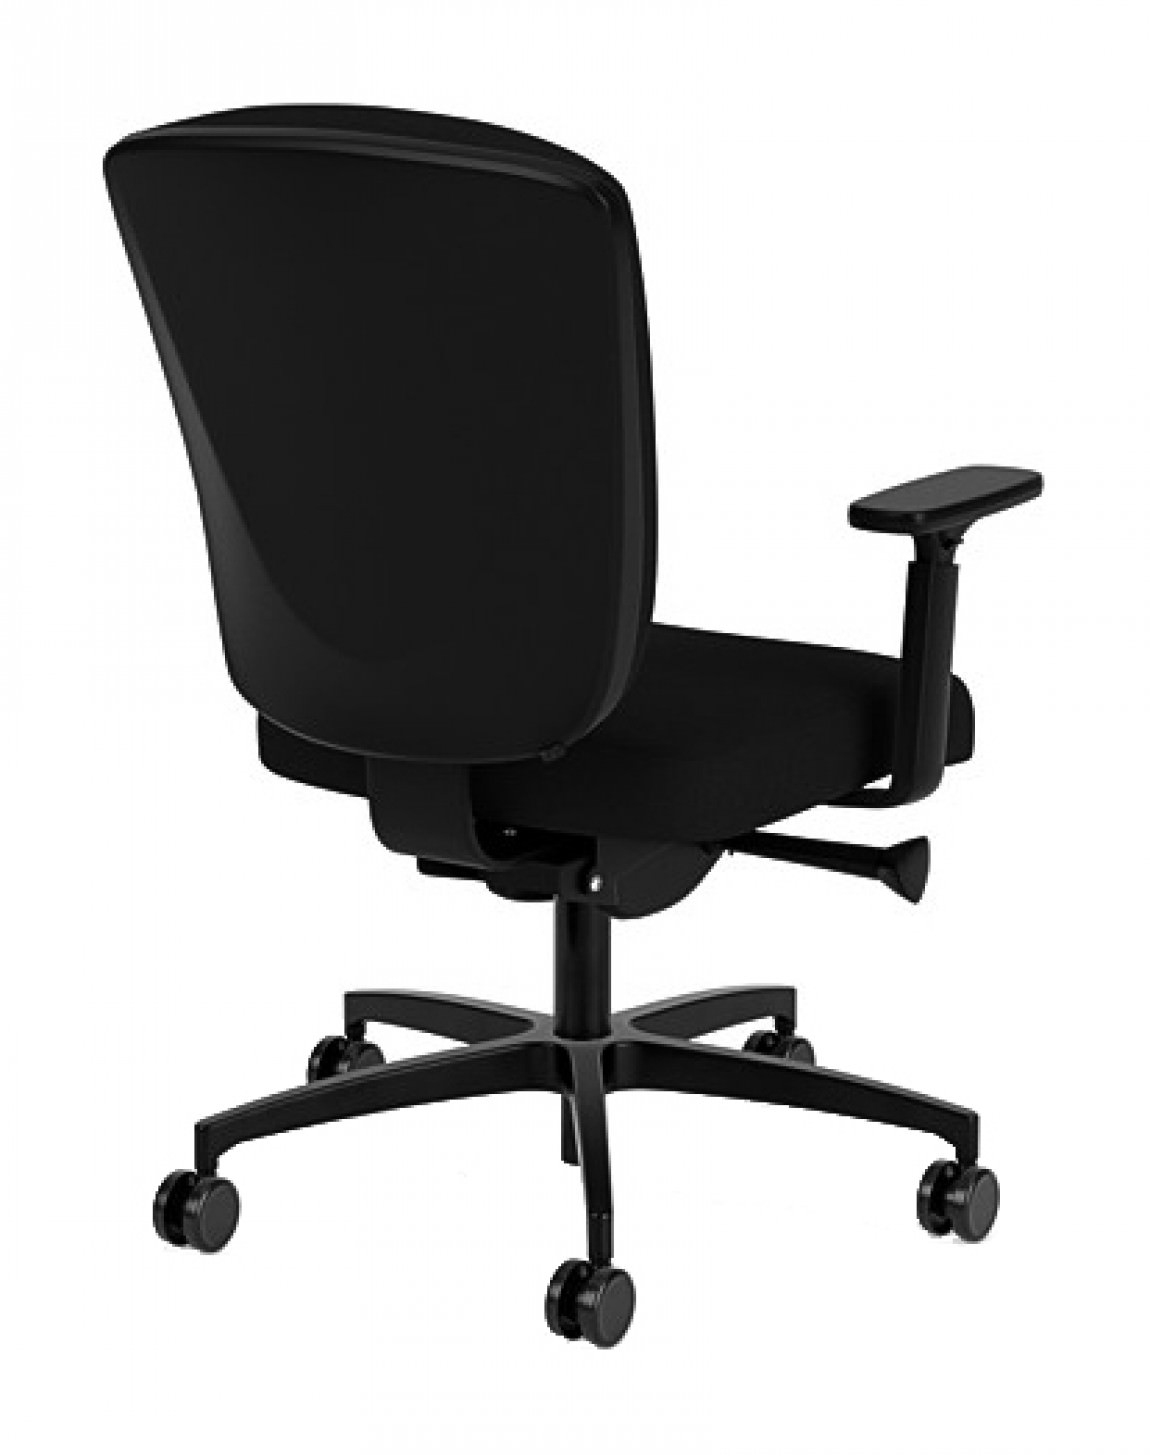 https://madisonliquidators.com/images/p/1150/29988-office-chair-with-lumbar-support-3.jpg